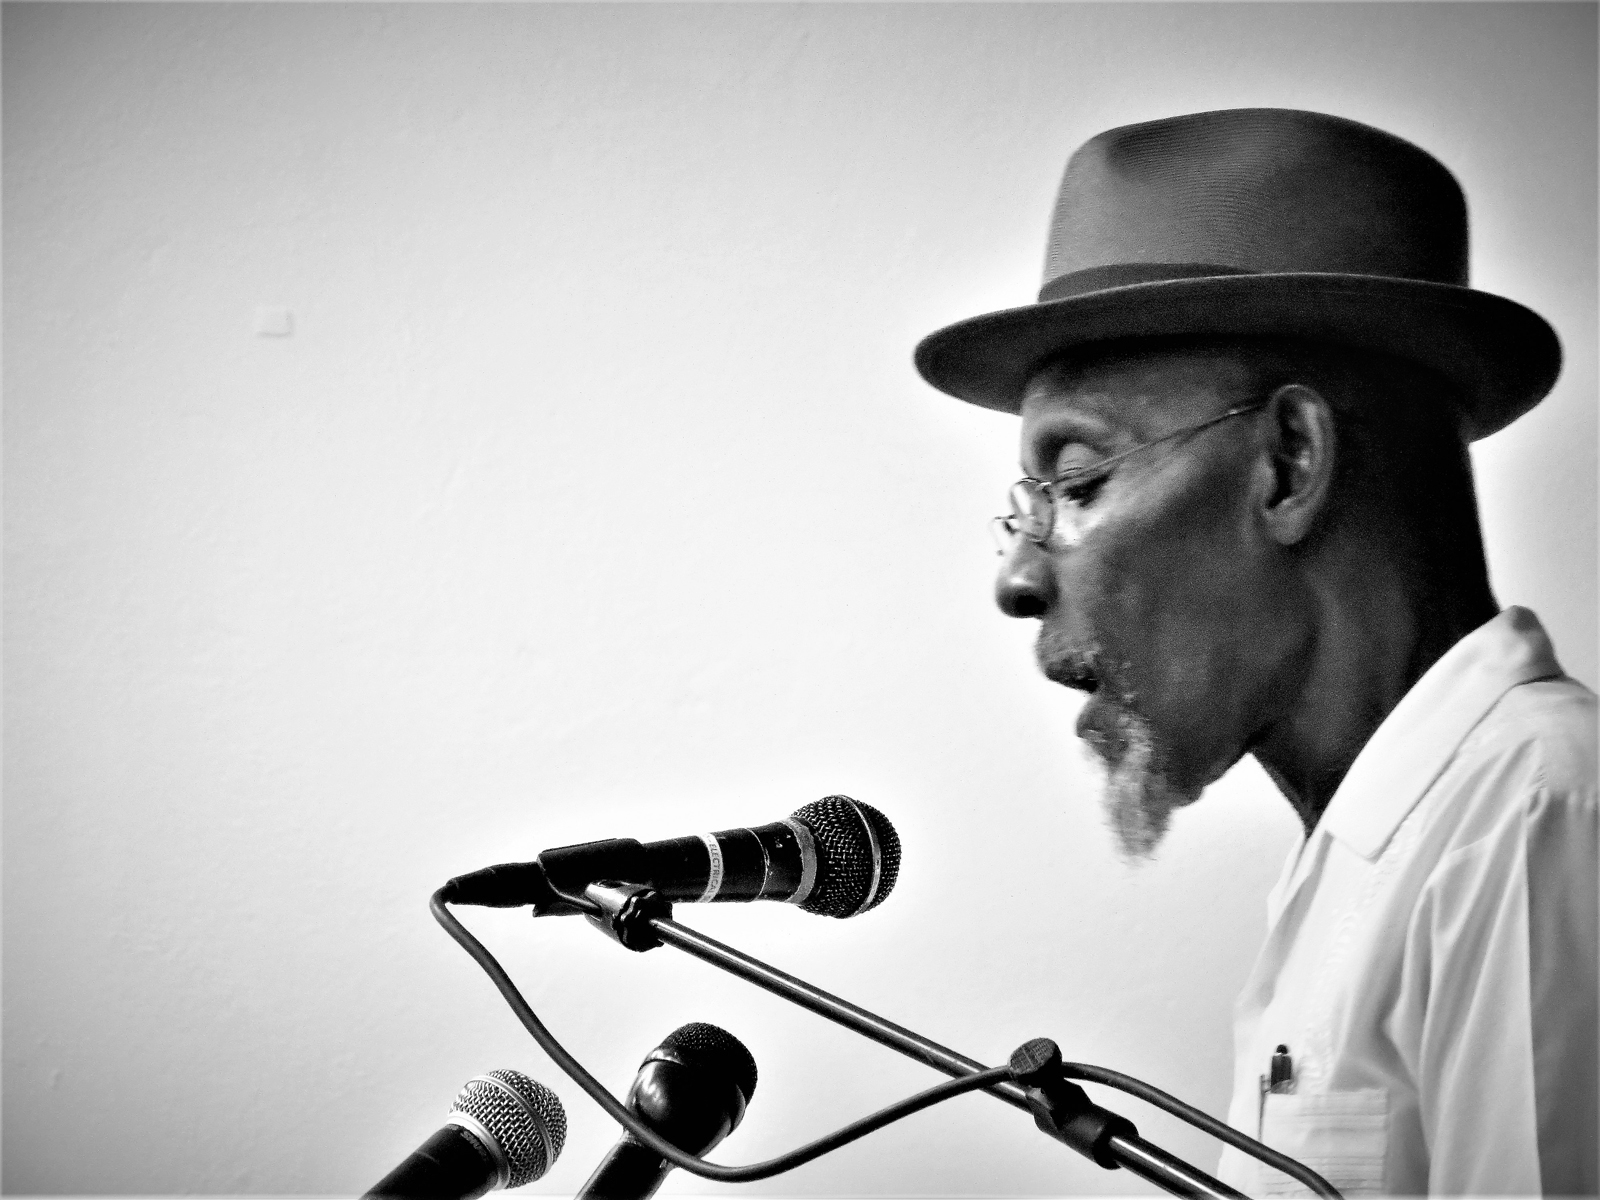 Revisit The Independent's portrait of dub poet Linton Kwesi Johnson